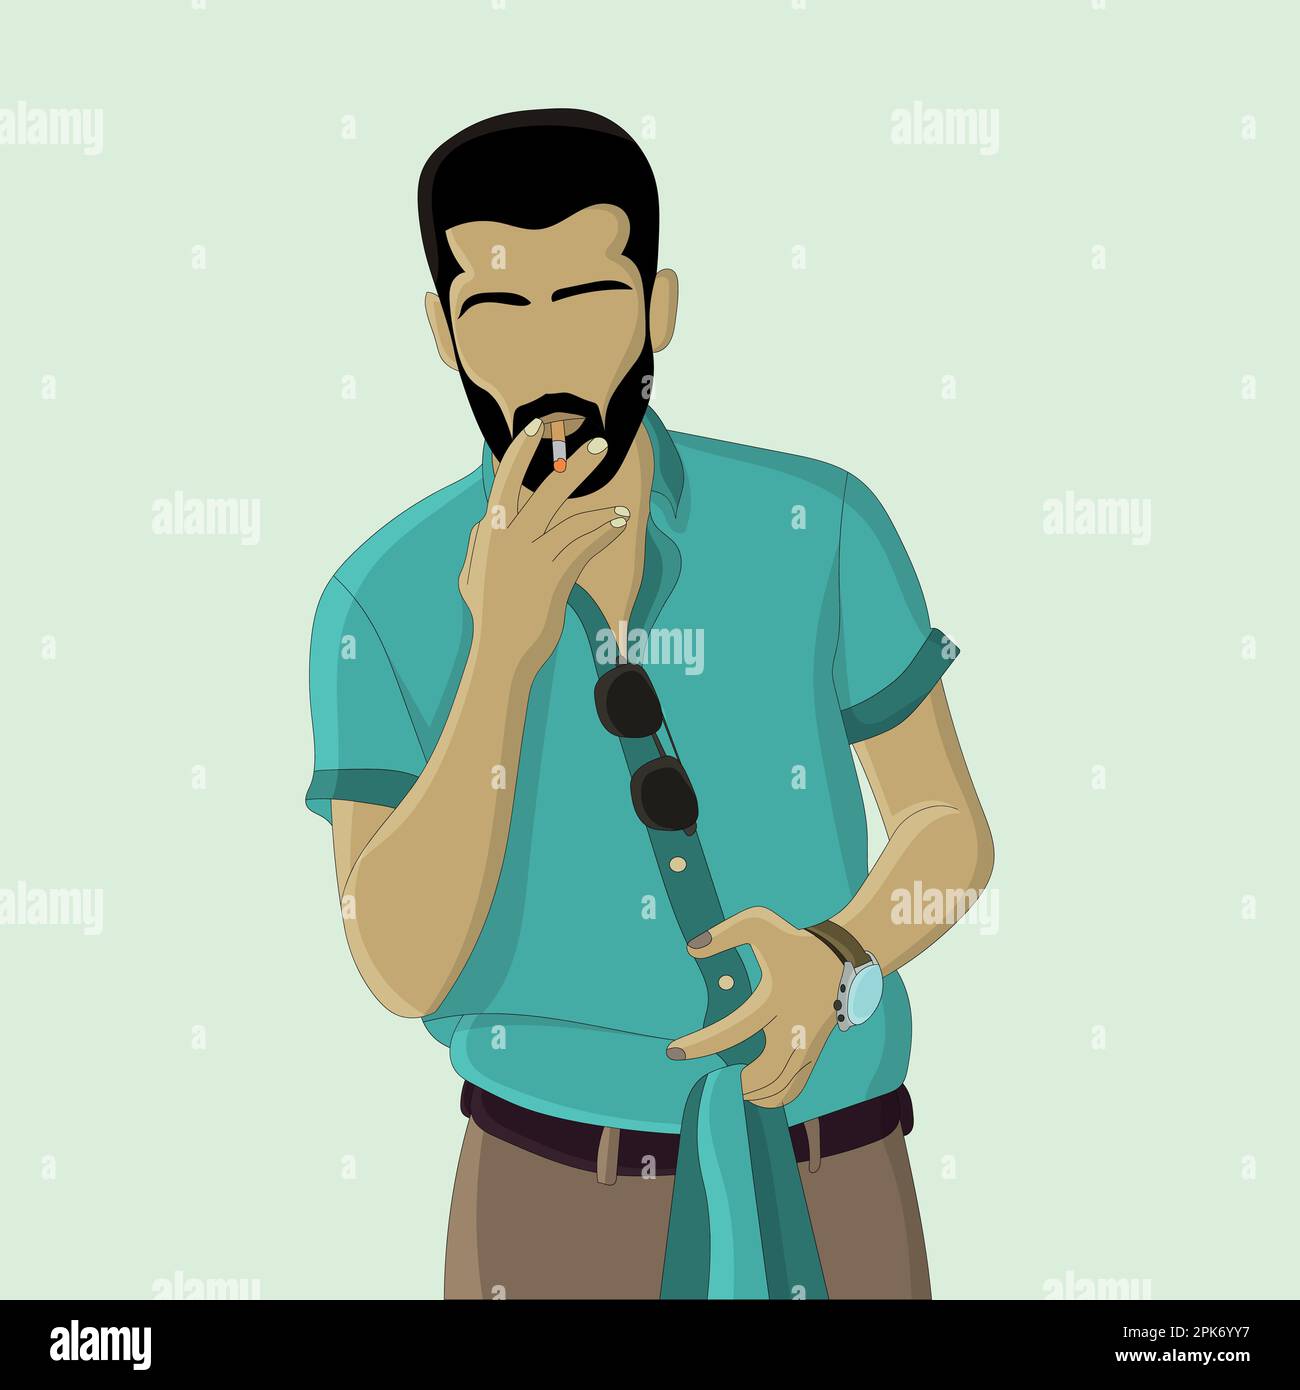 flat design of smoking man with wearing wristwatch Stock Vector